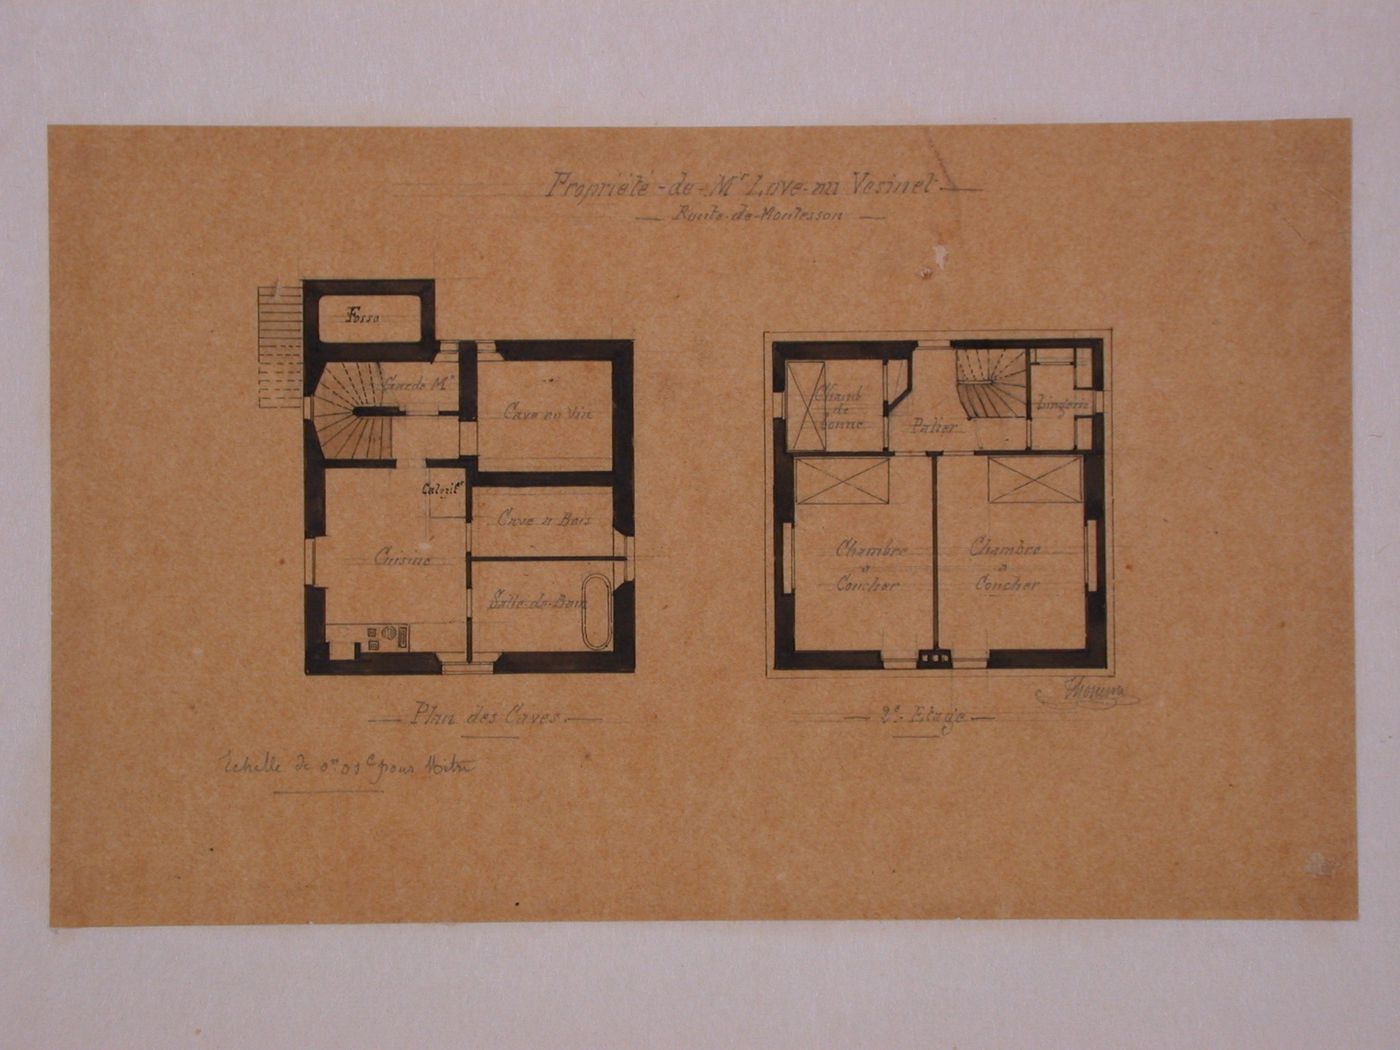 Two plans for Henri Love House, Le Vésinet